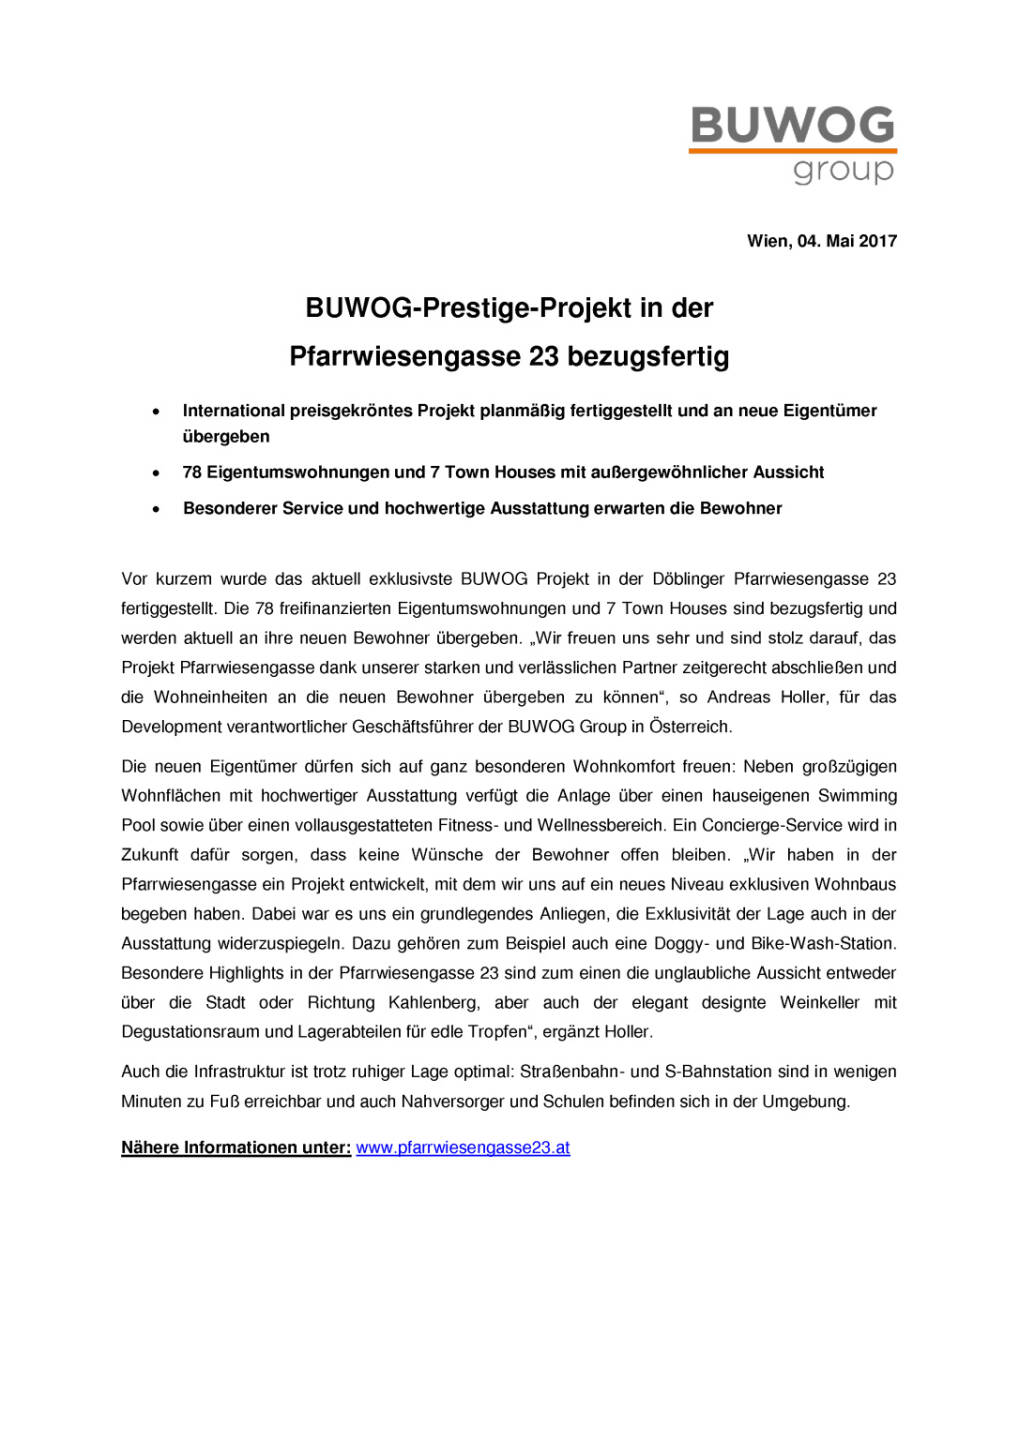 Buwog-Prestige-Projekt in der Pfarrwiesengasse 23 bezugsfertig, Seite 1/2, komplettes Dokument unter http://boerse-social.com/static/uploads/file_2238_buwog-prestige-projekt_in_der_pfarrwiesengasse_23_bezugsfertig.pdf